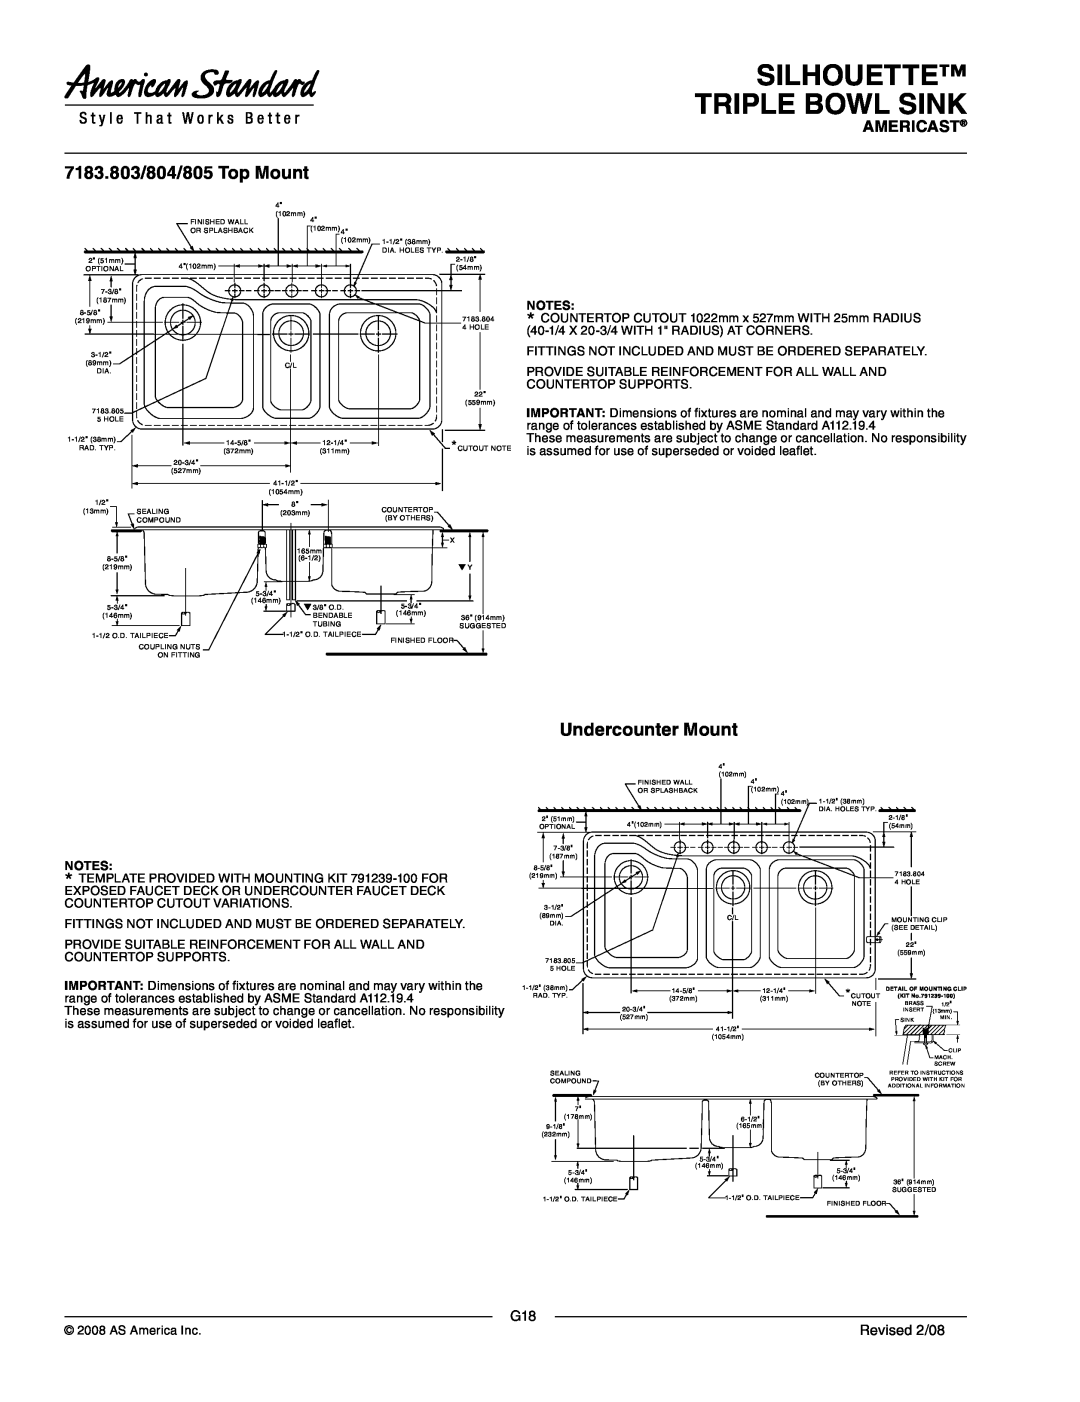 American Standard 7183.805, 7183.801, 7183.804, 7183.803 dimensions Silhouette Triple Bowl Sink, Americast, Revised 2/08 